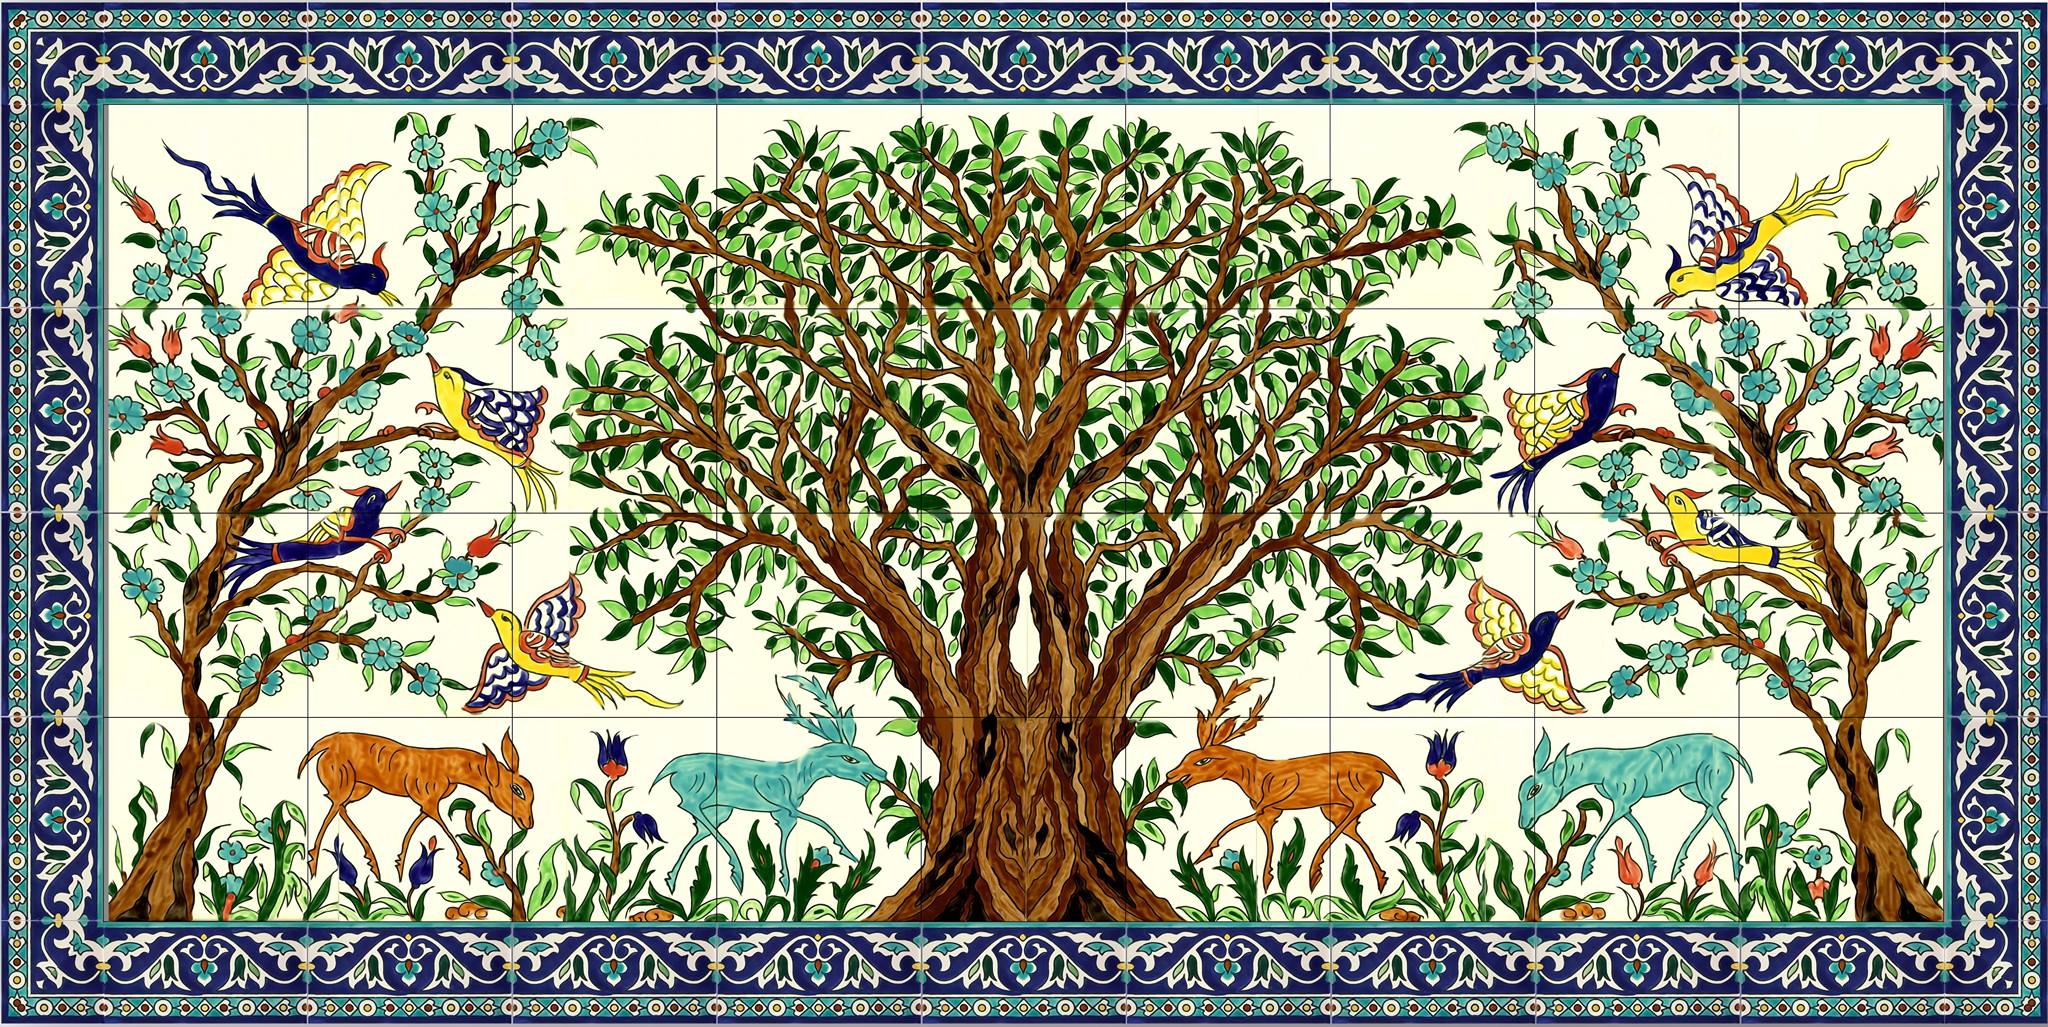 Animal, Plant, Ornament / Armenian Ceramics – Balian Family